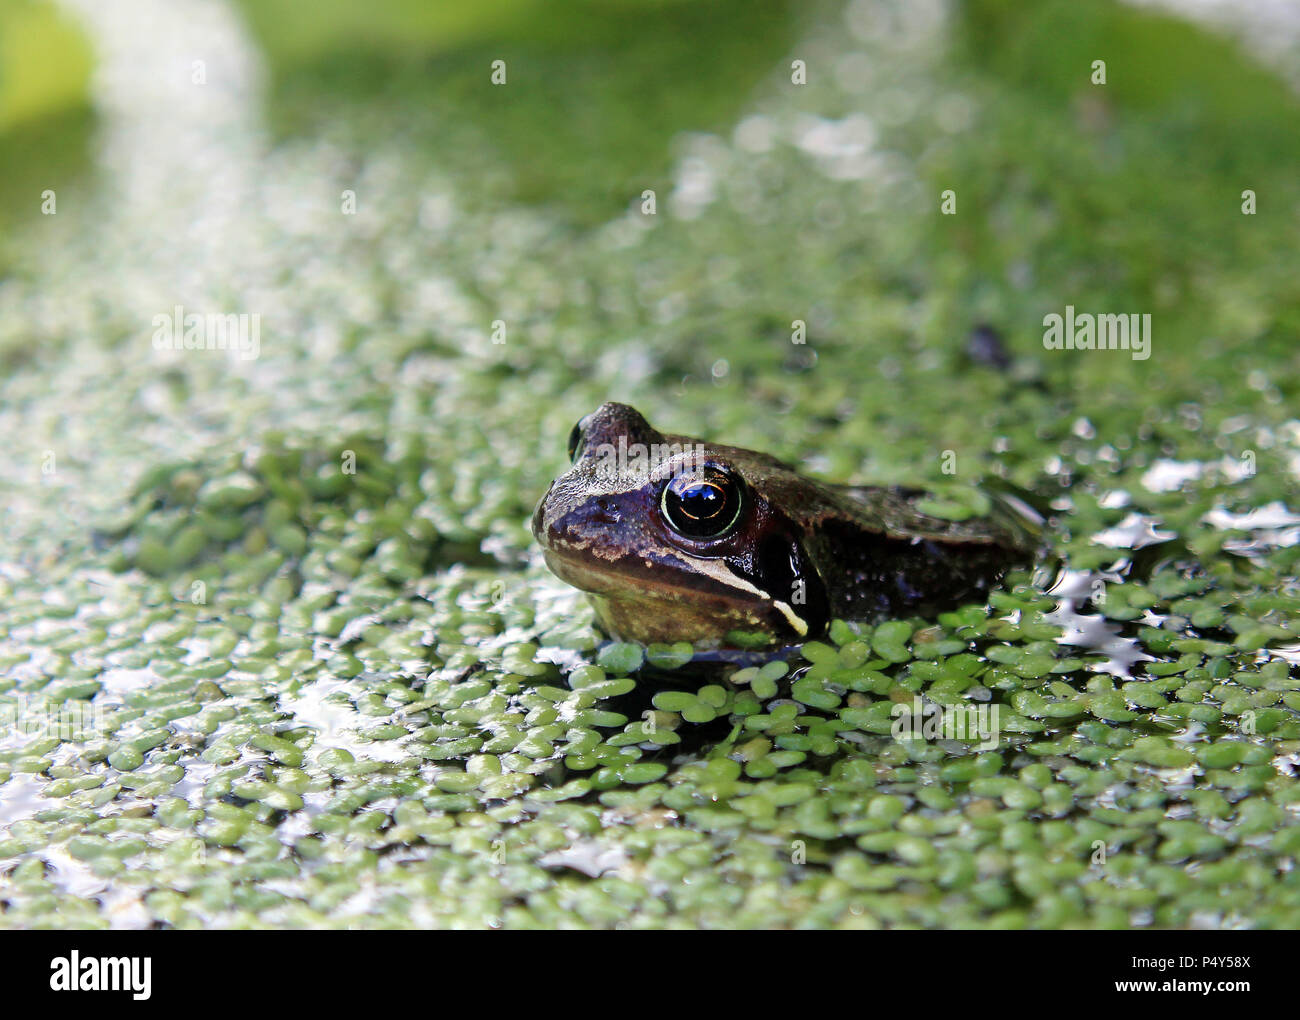 Rana común en un estanque rodeado de lenteja de agua Foto de stock